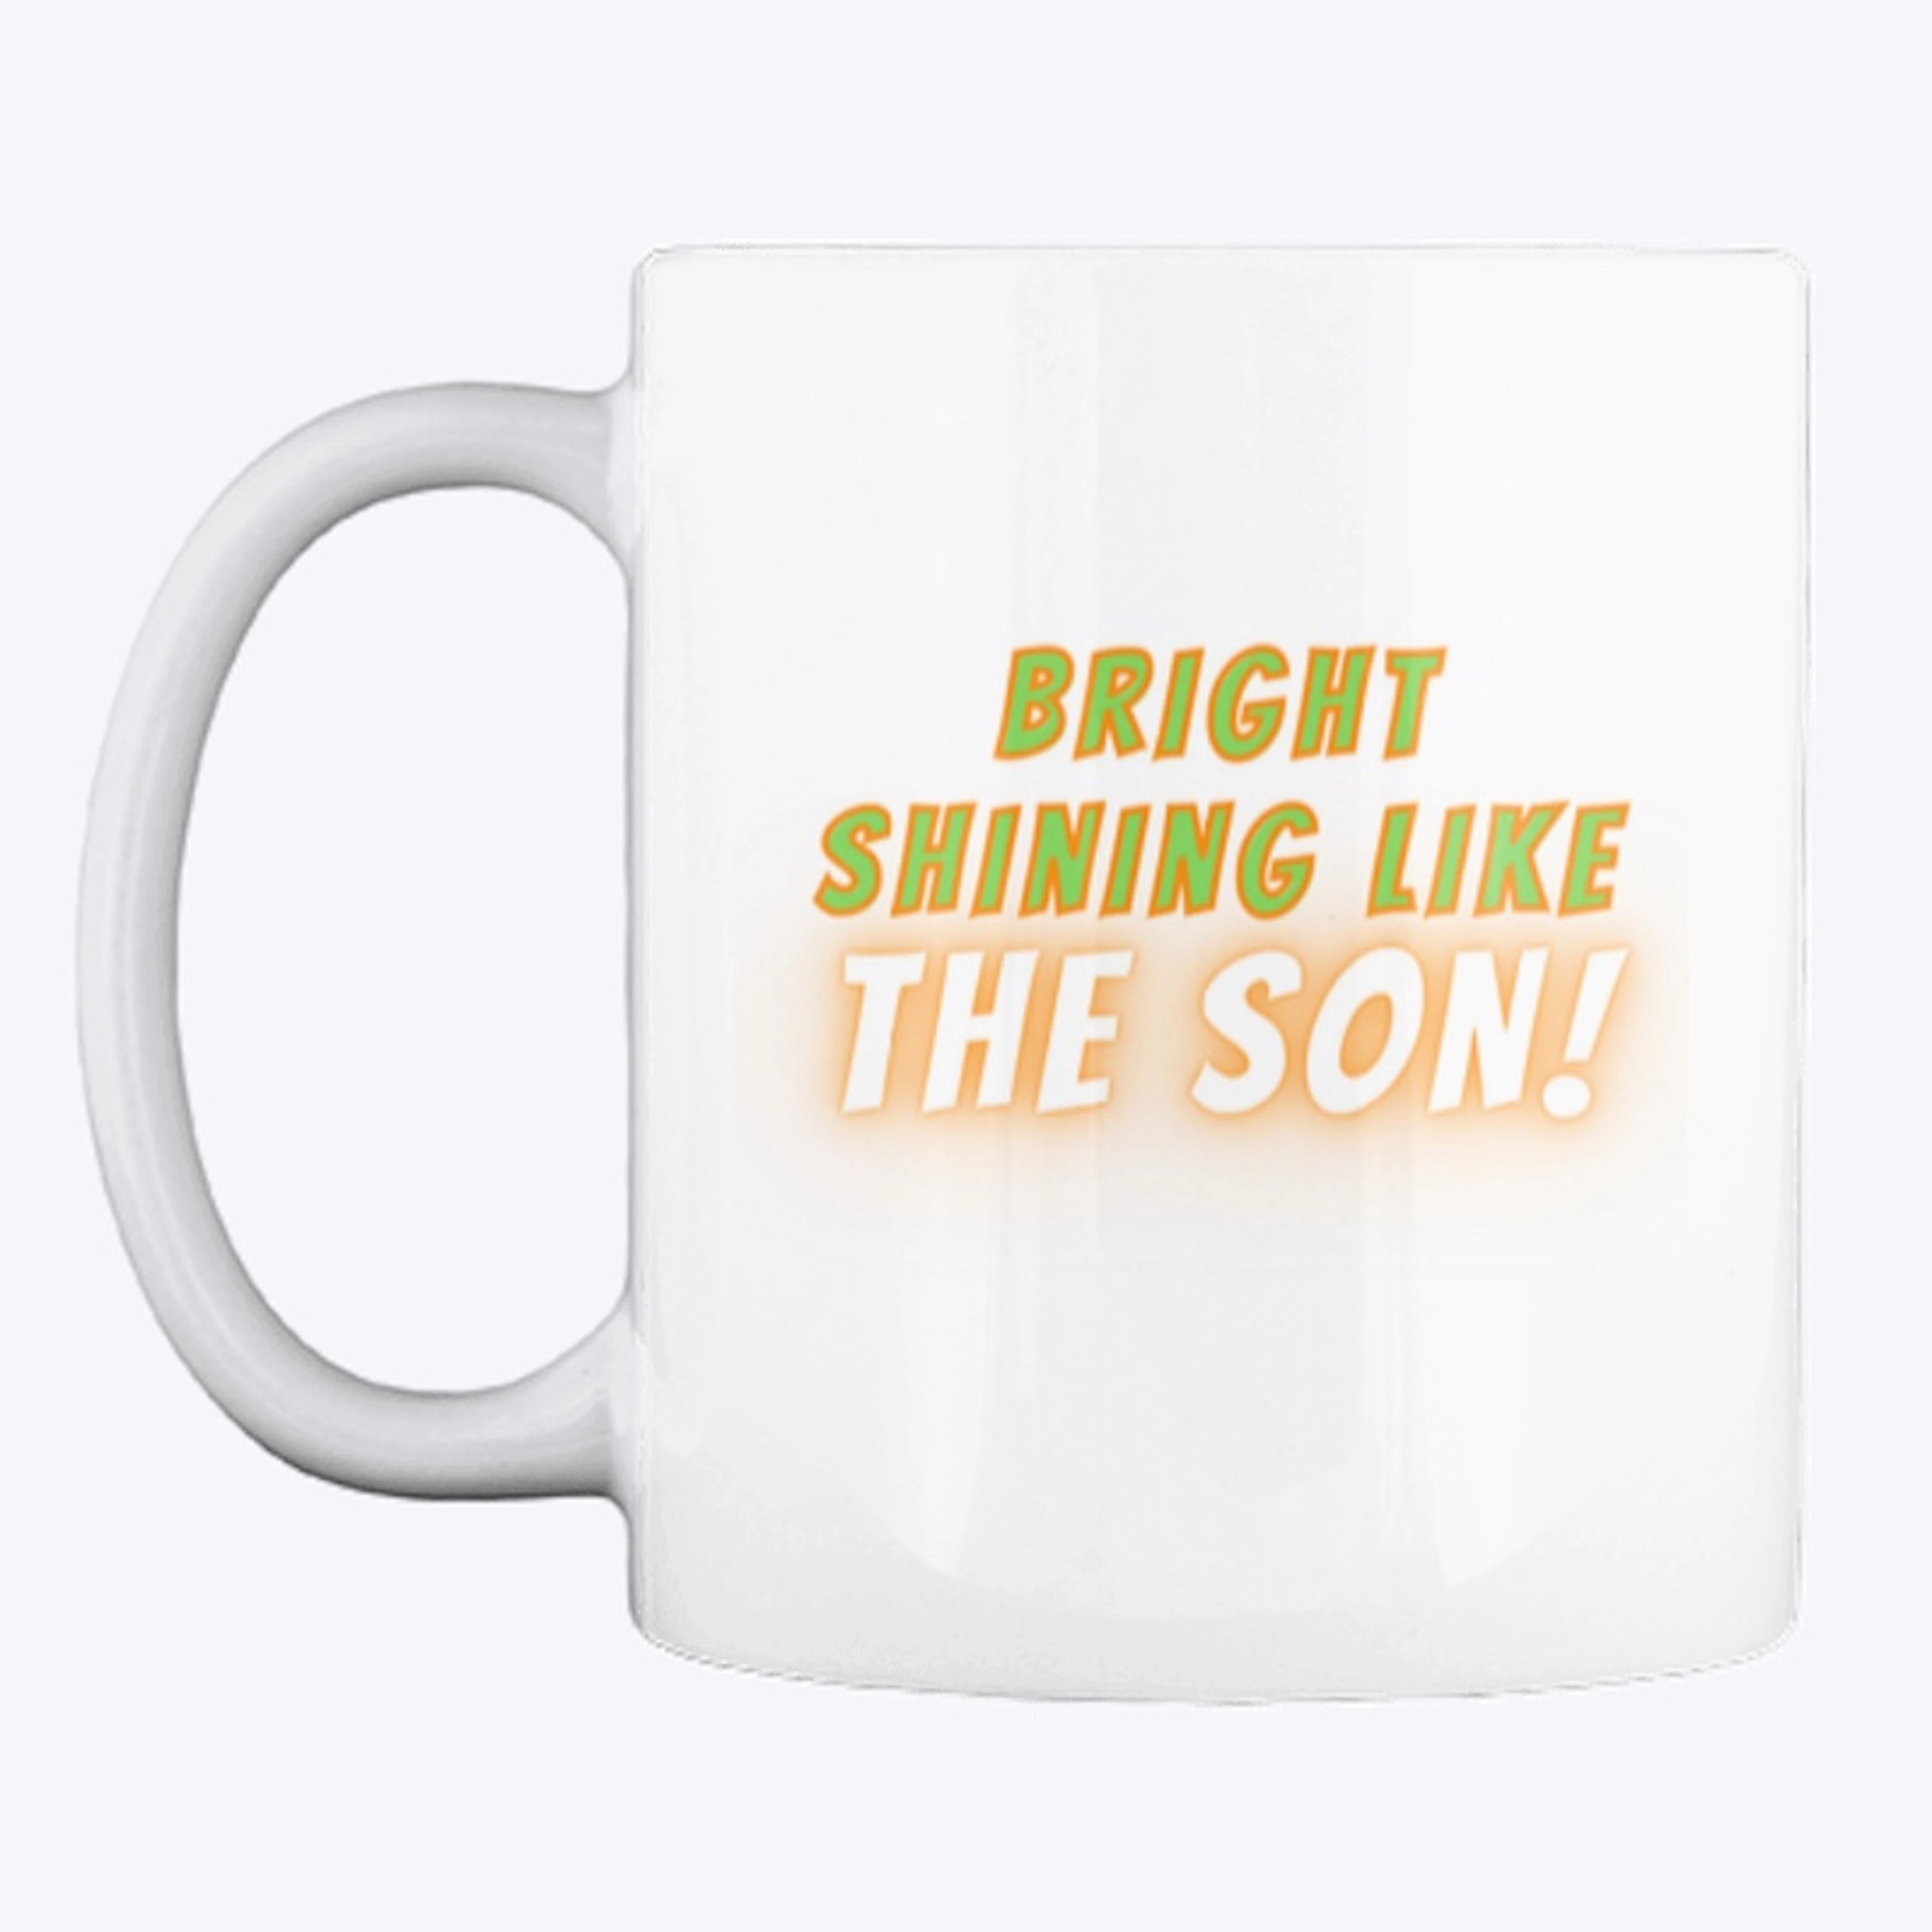 Bright Shining Like the Son! Mug